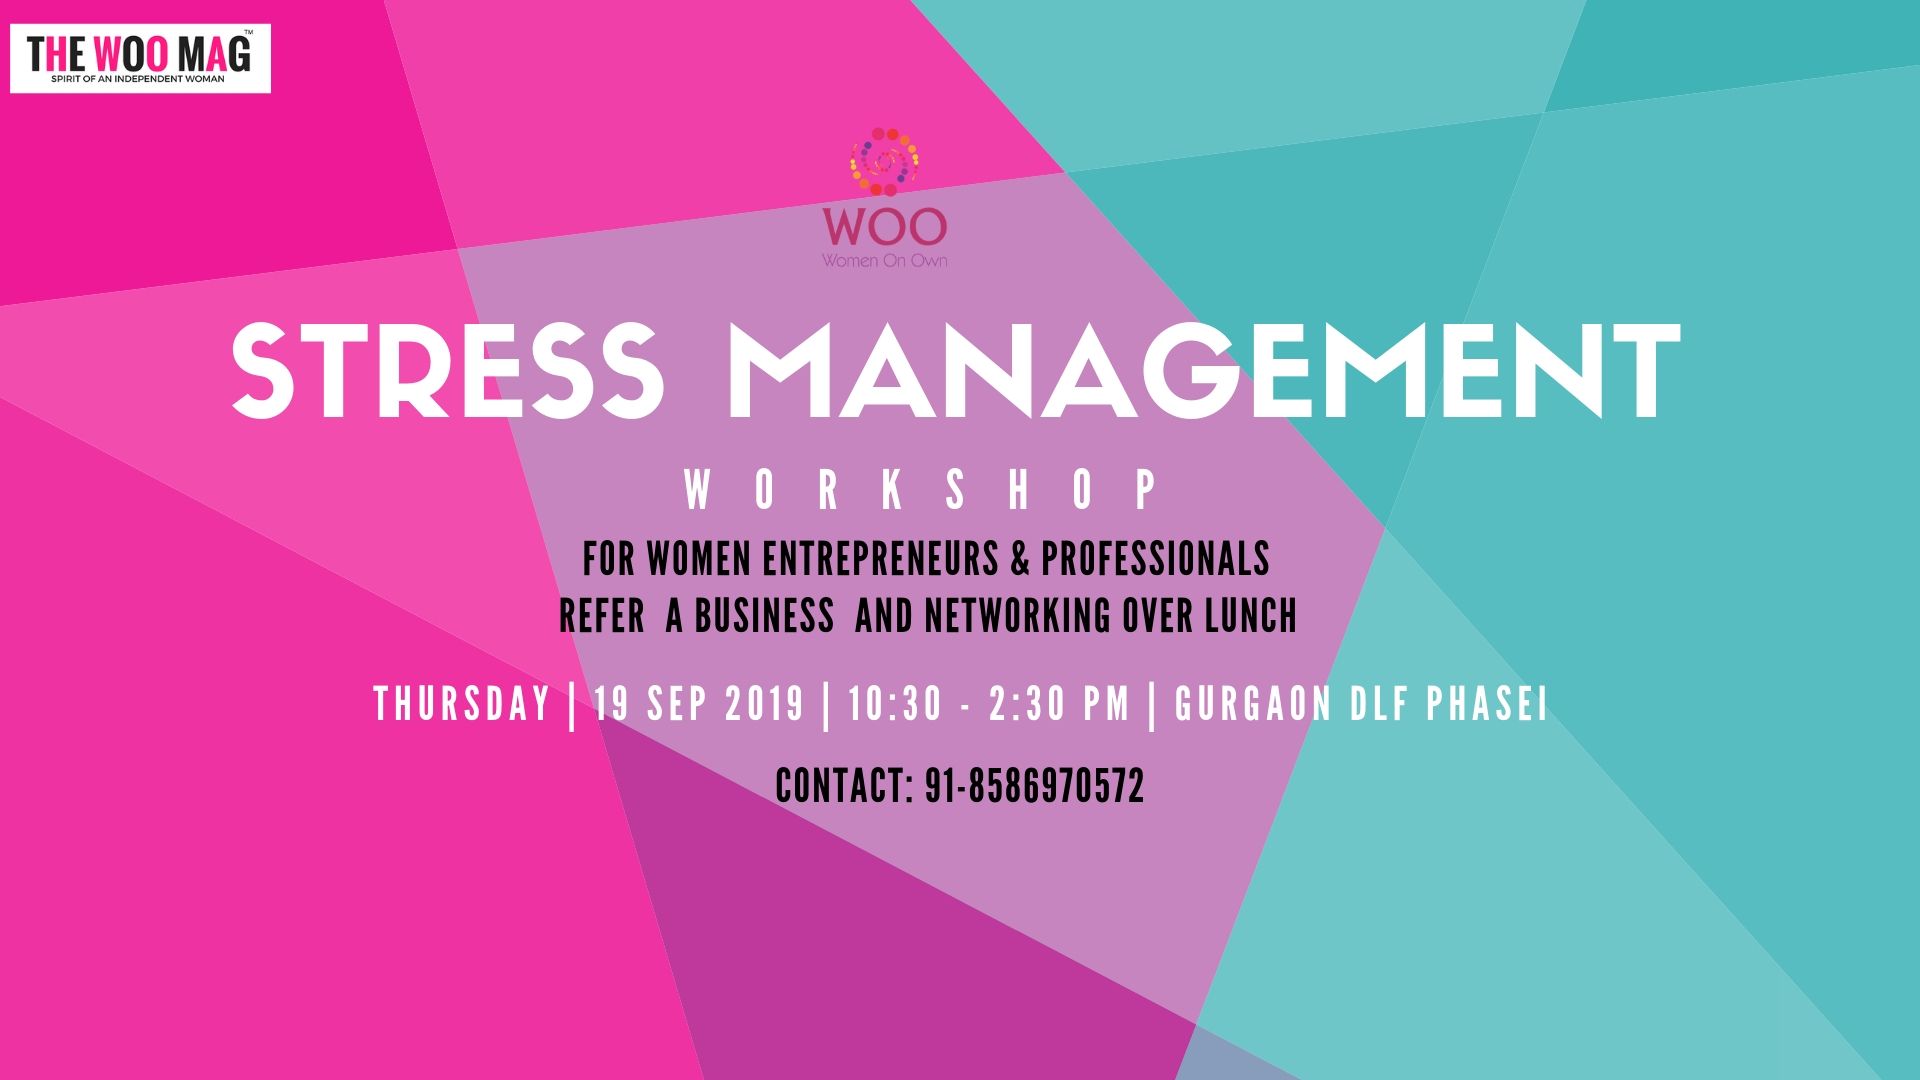 Stress Management for women entrepreneurs and professionals, Gurgaon, Haryana, India